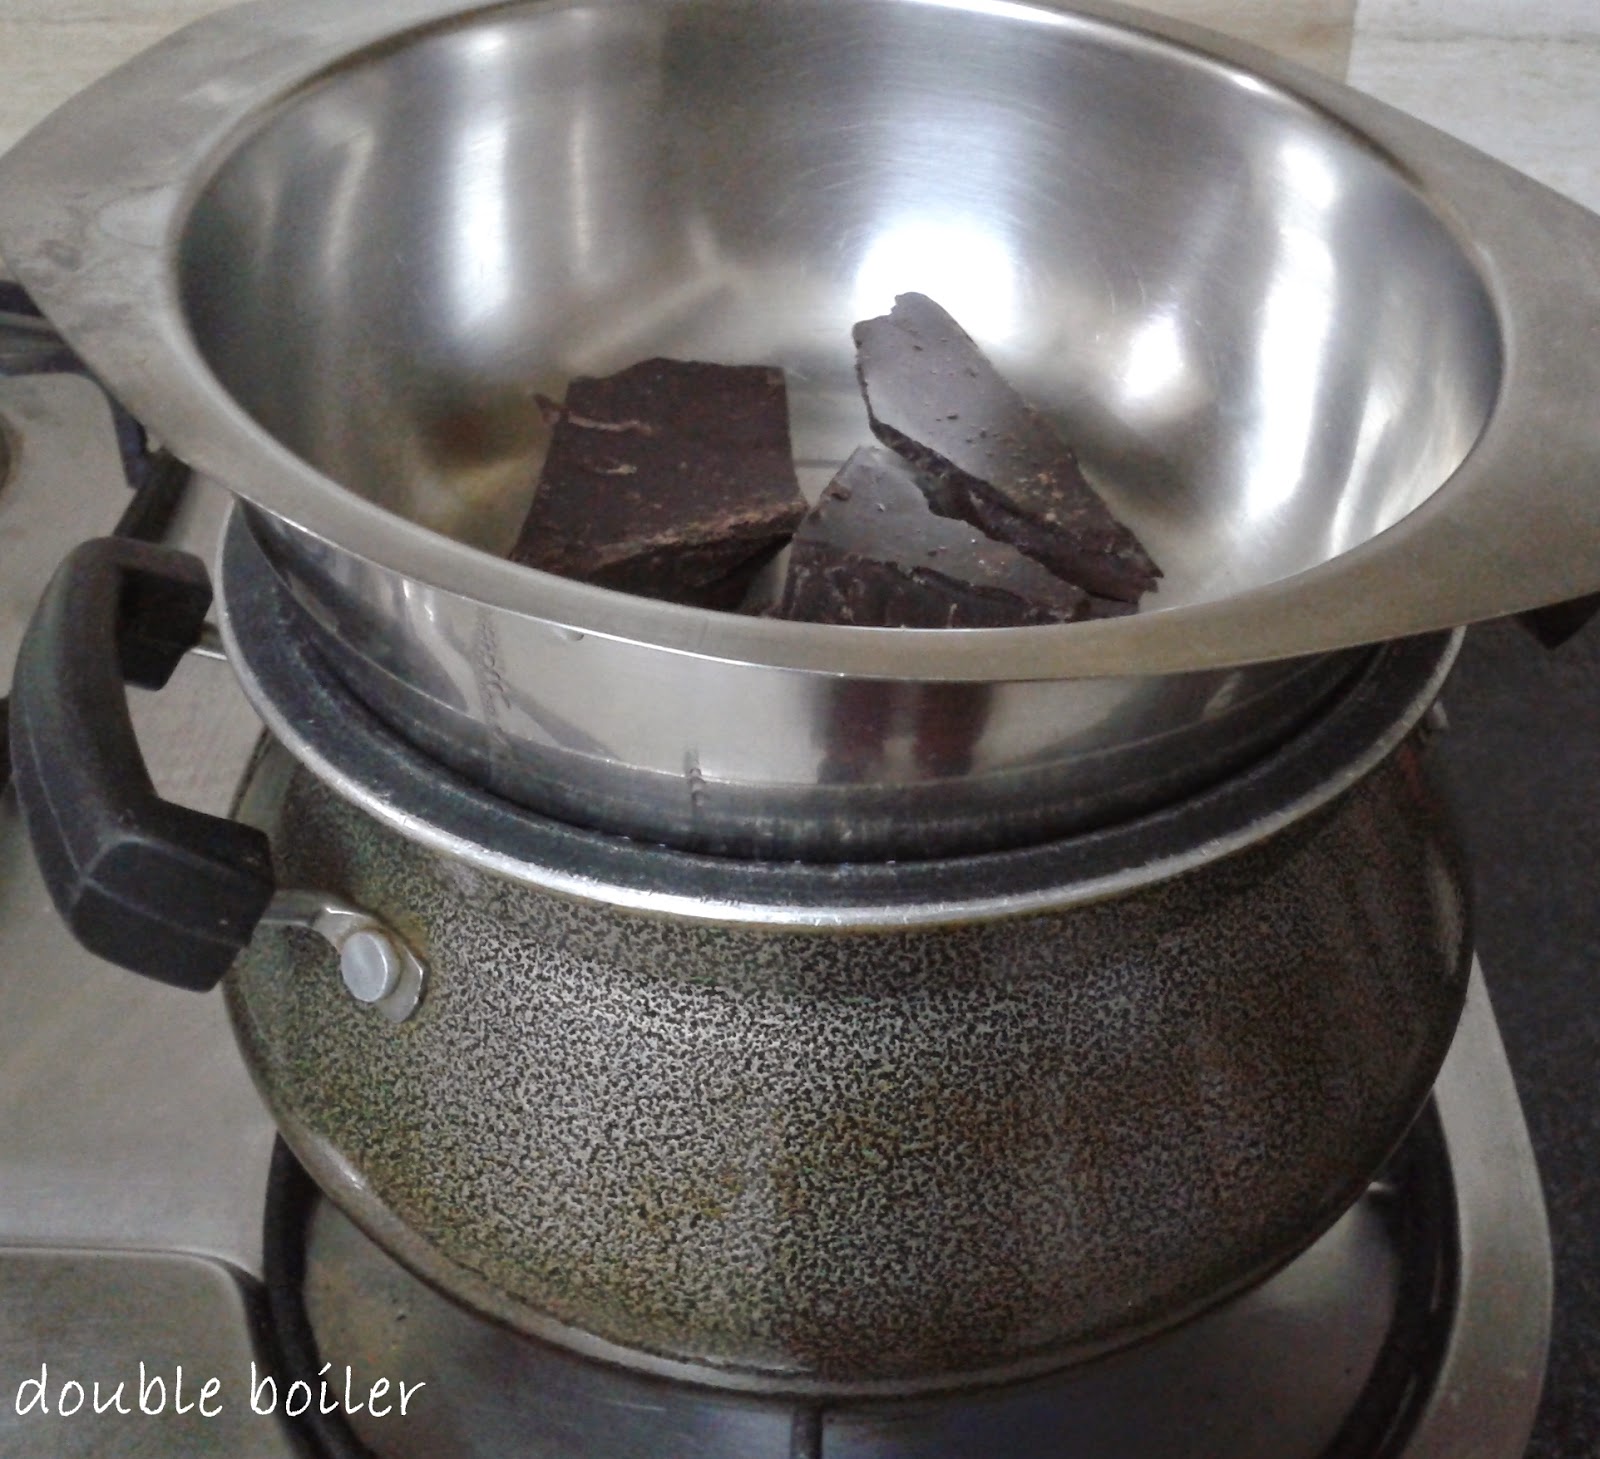 http://www.paakvidhi.com/2014/10/how-to-melt-chocolate.html